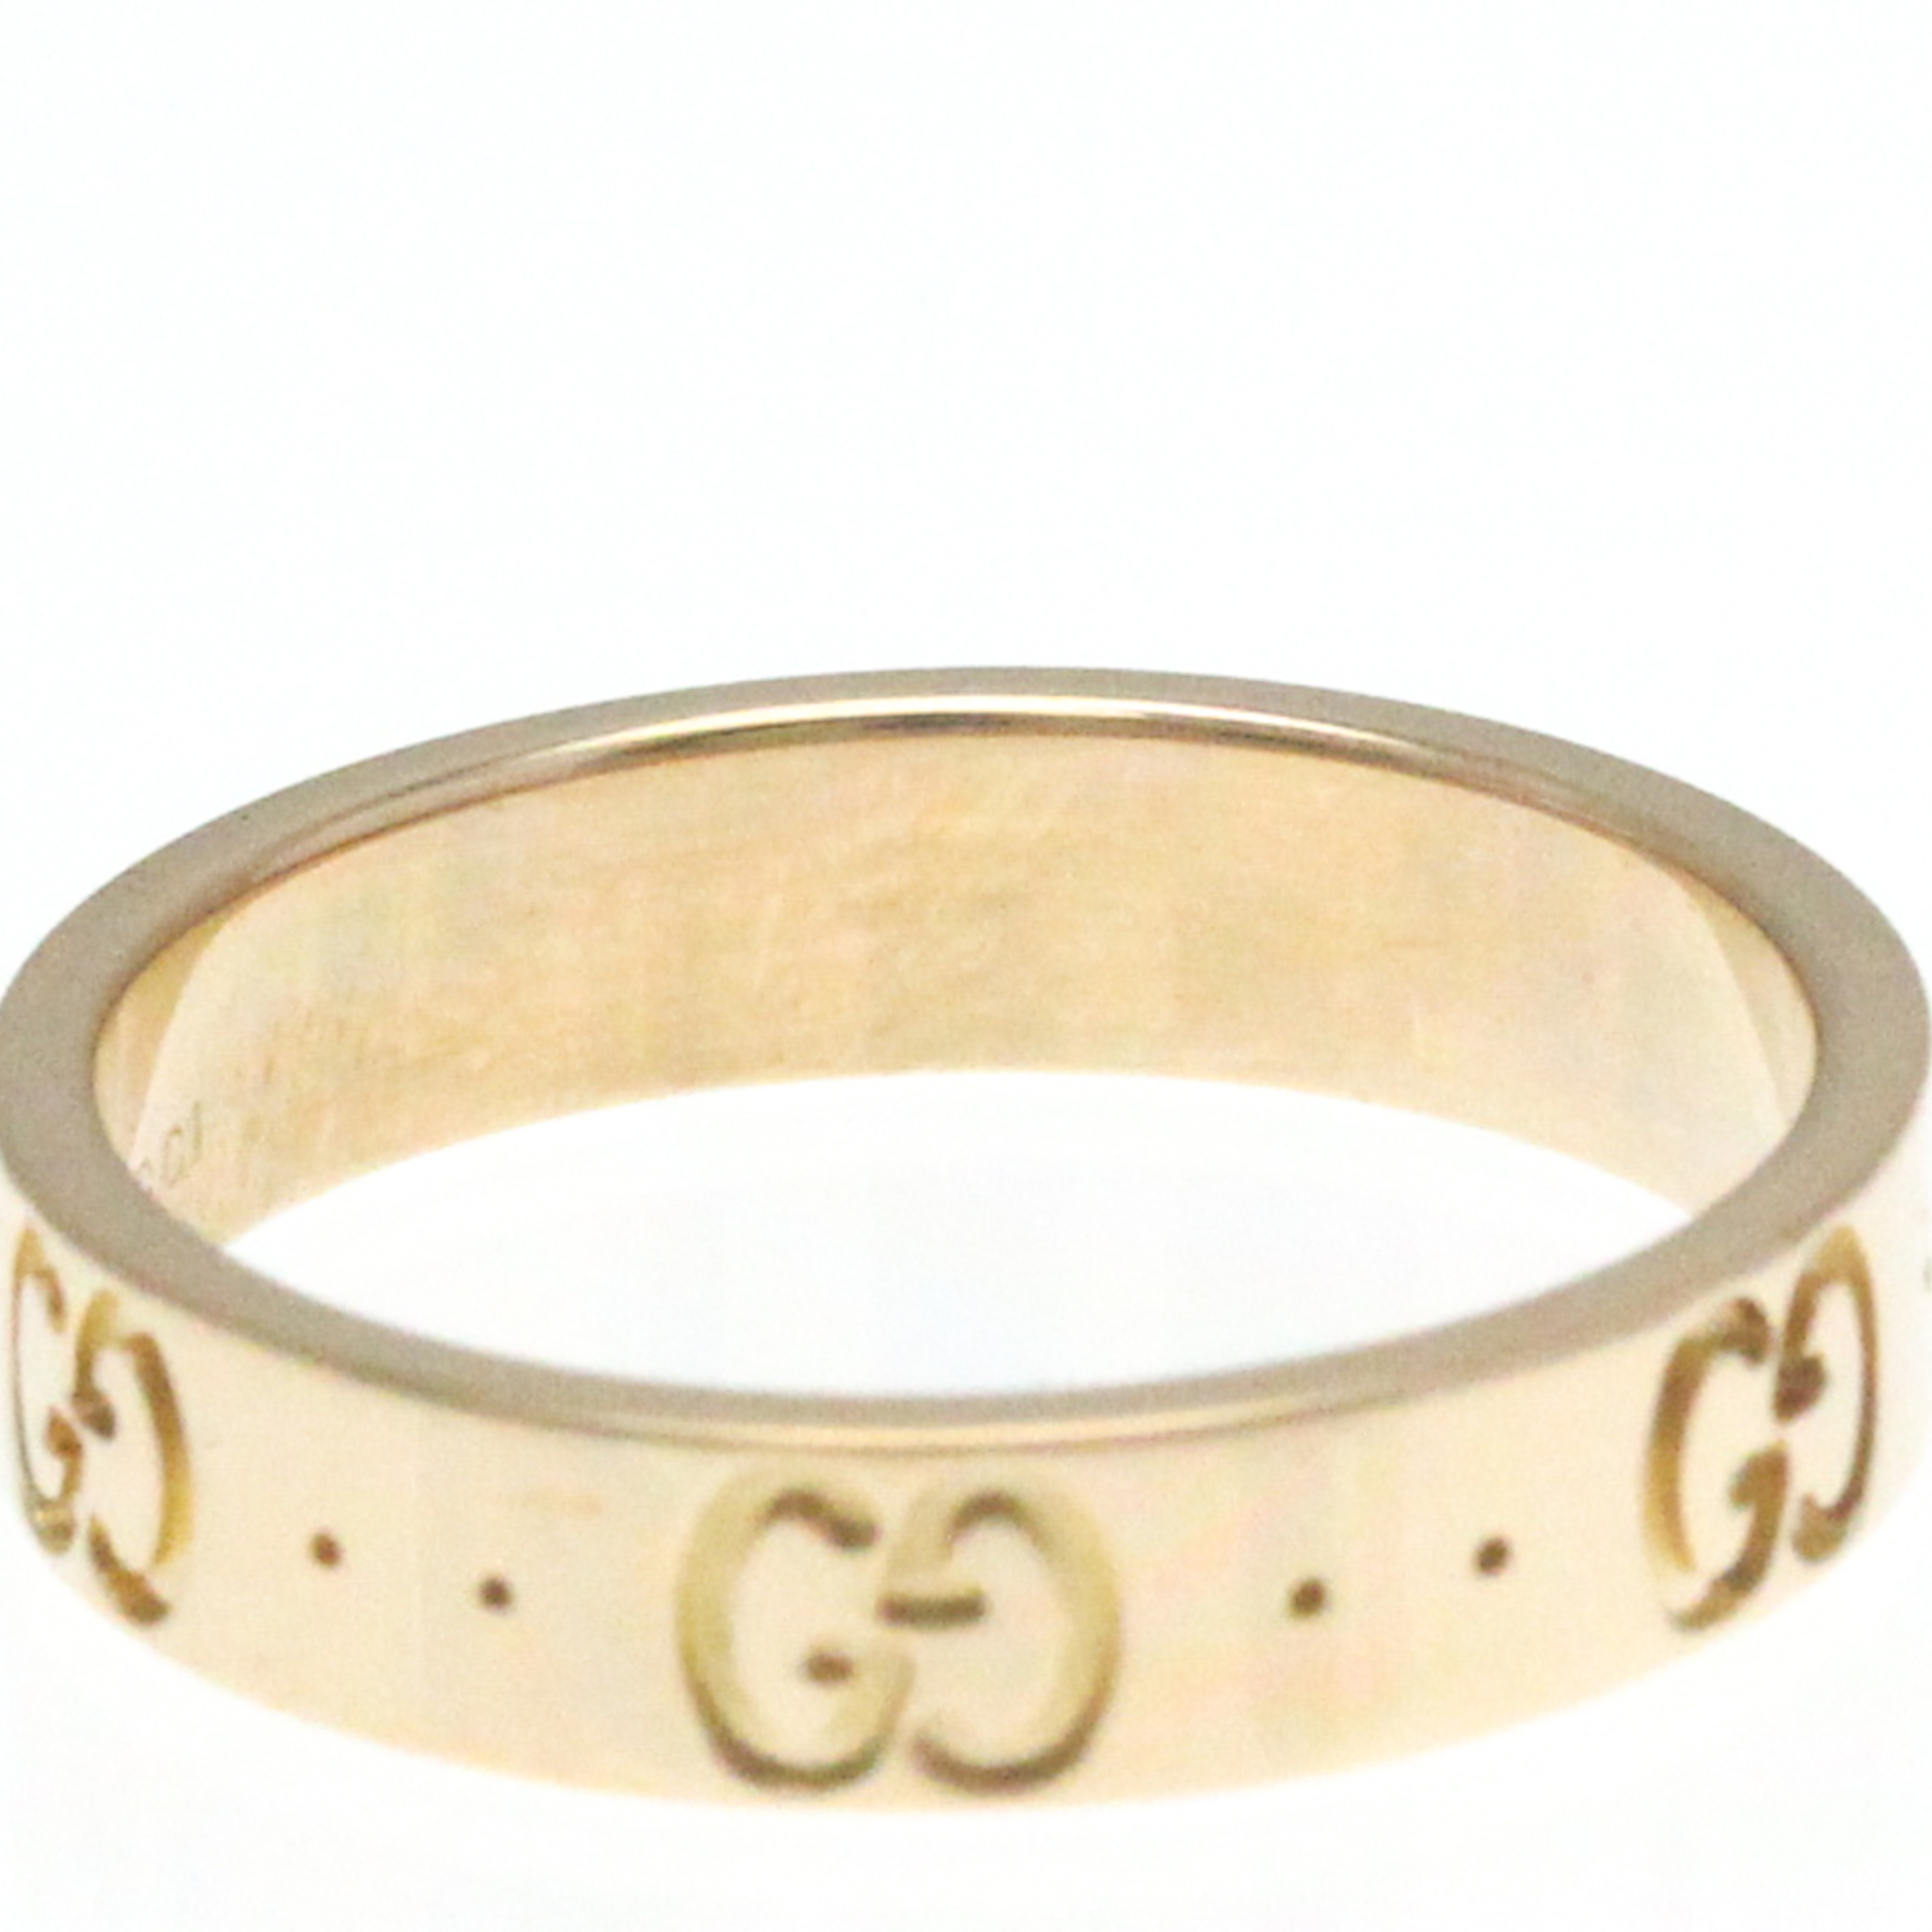 Gucci Icon Pink Gold (18K) Fashion No Stone Band Ring Pink Gold